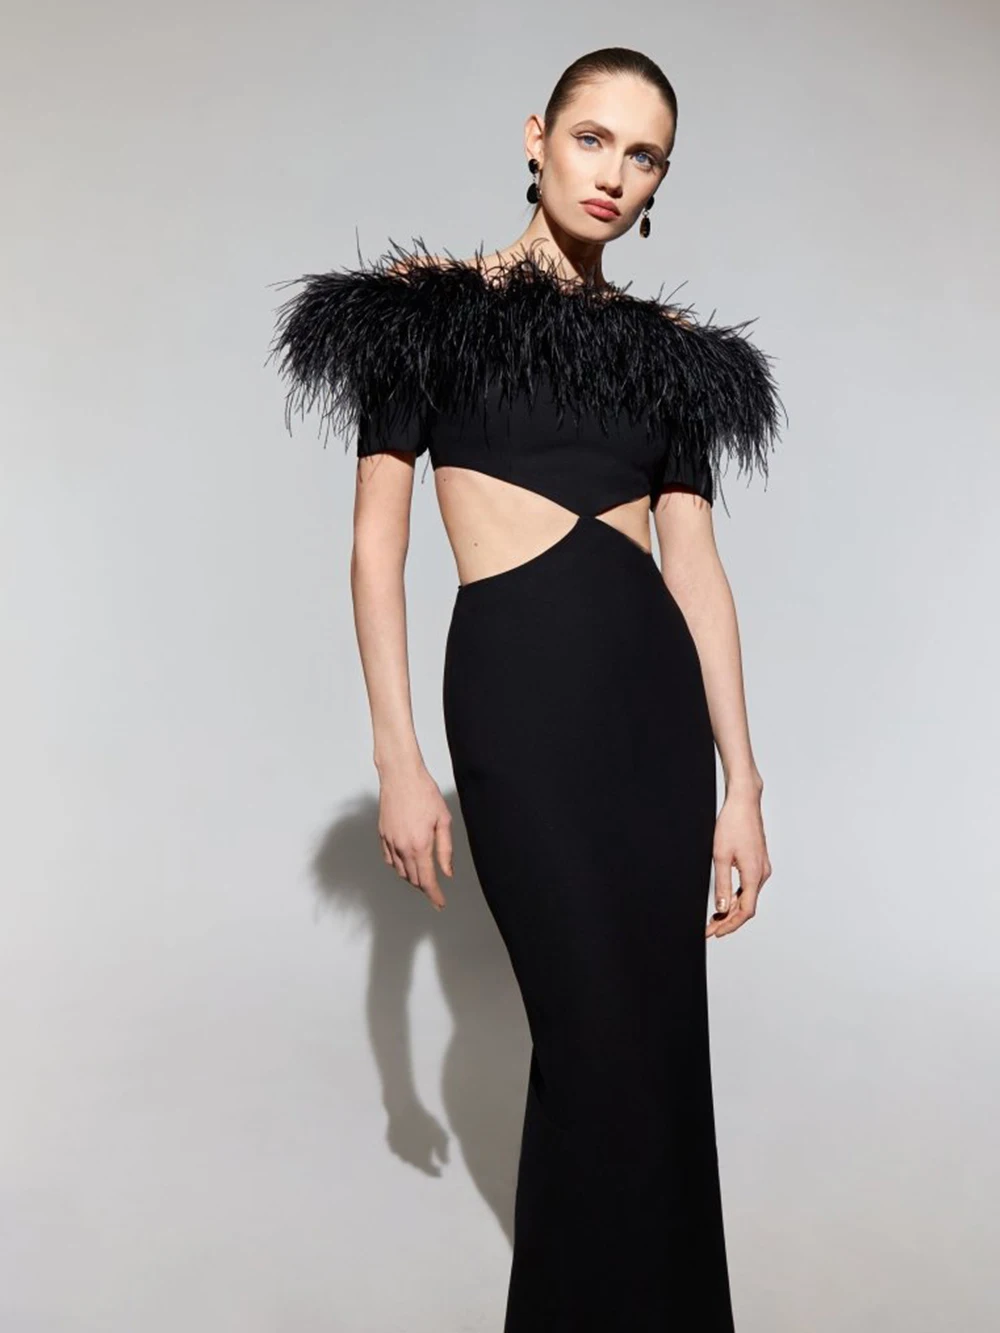 New 2023 Women Summer Sexy Feather Black Red Maxi Long Bodycon Cotton Custume Dress Elegant Party Club Dress